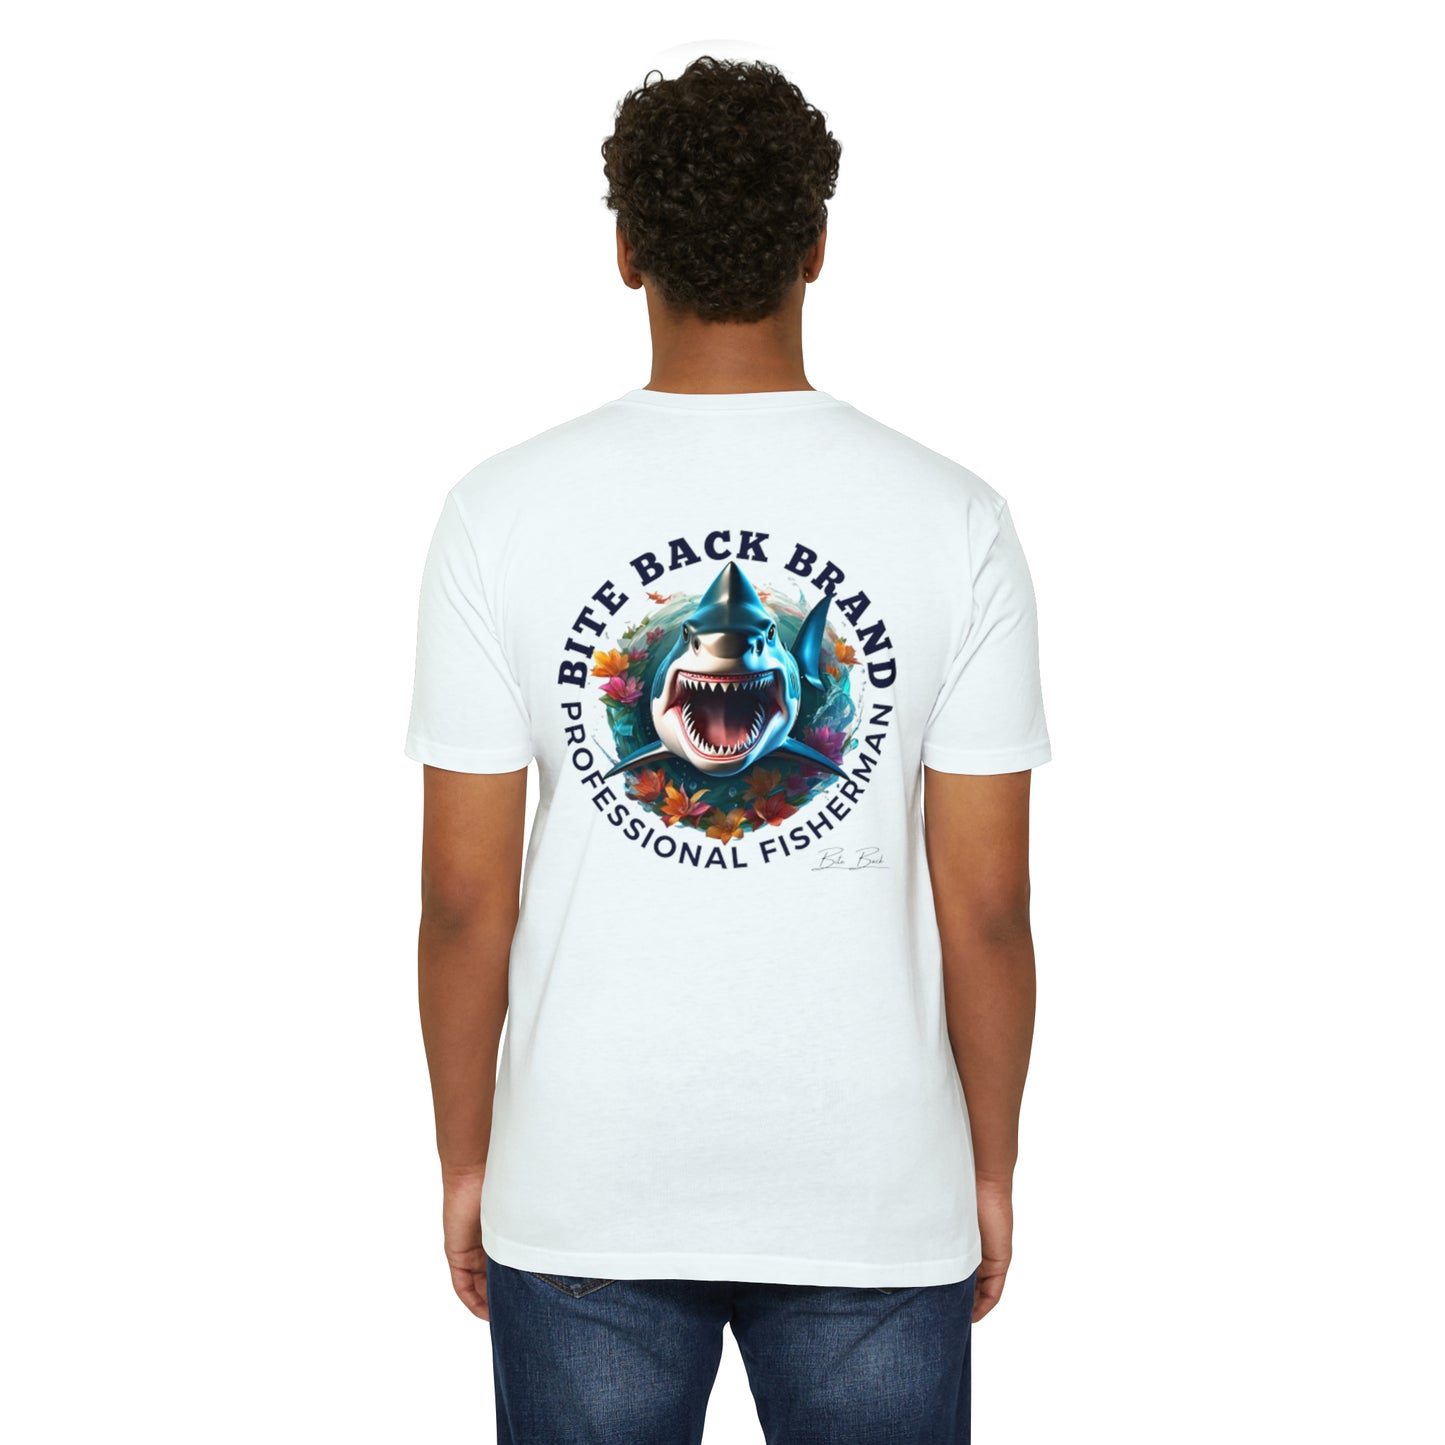 Professional Fisherman T-shirt